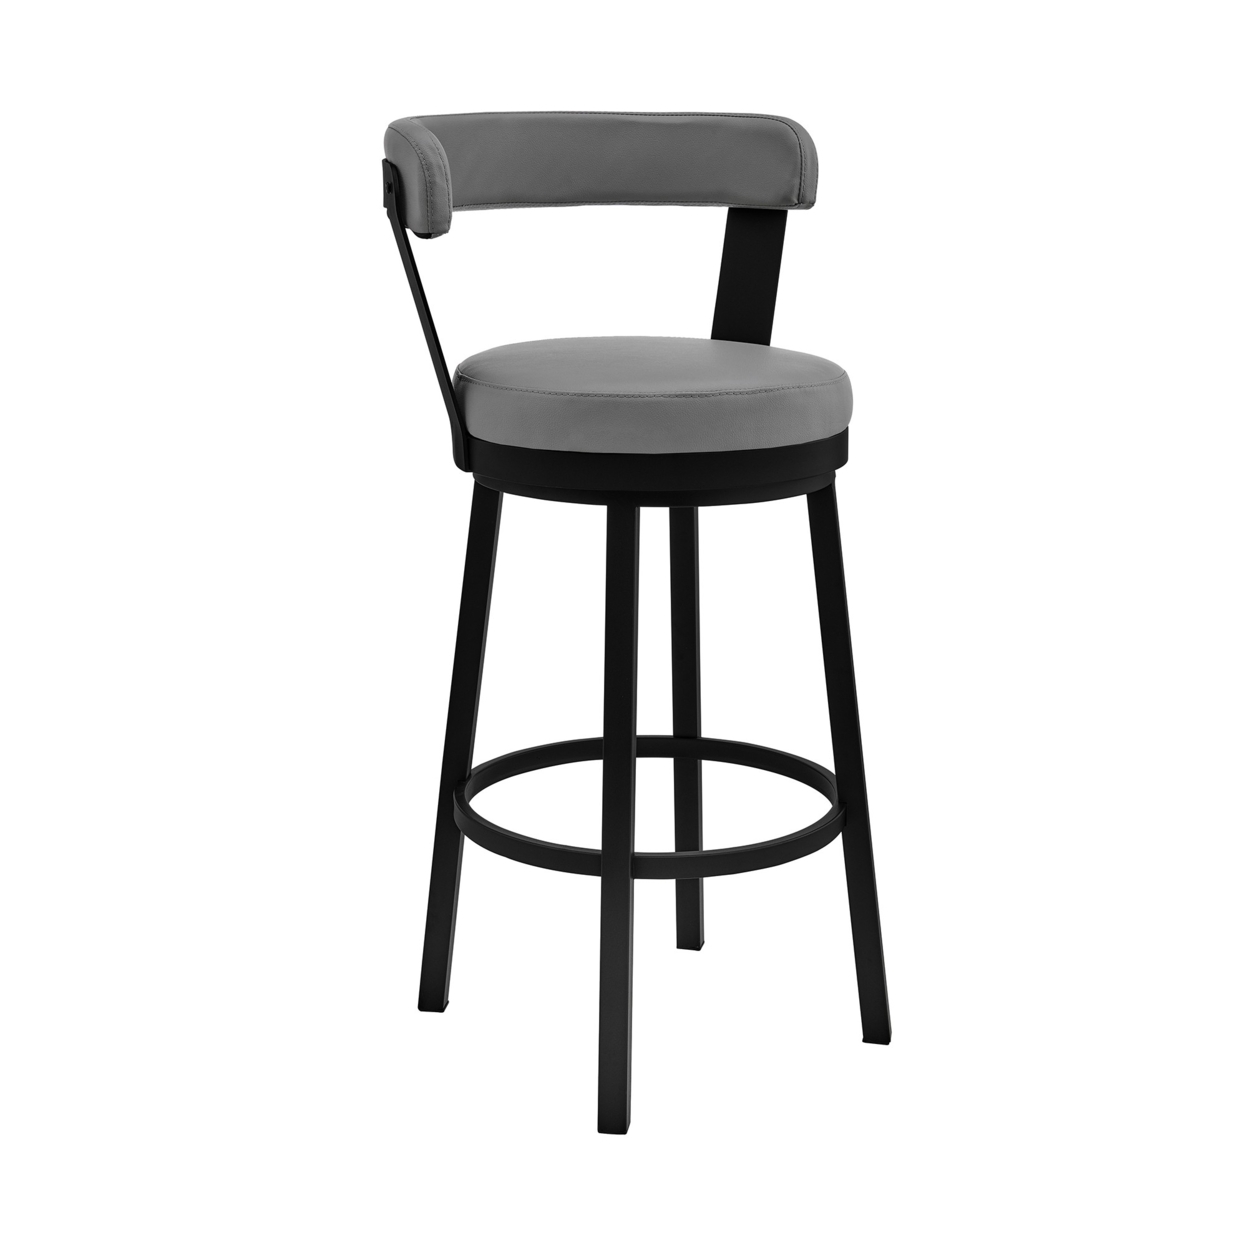 Emma 26 Inch Modern Counter Stool Chair, Vegan Leather, Swivel, Gray, Black- Saltoro Sherpi